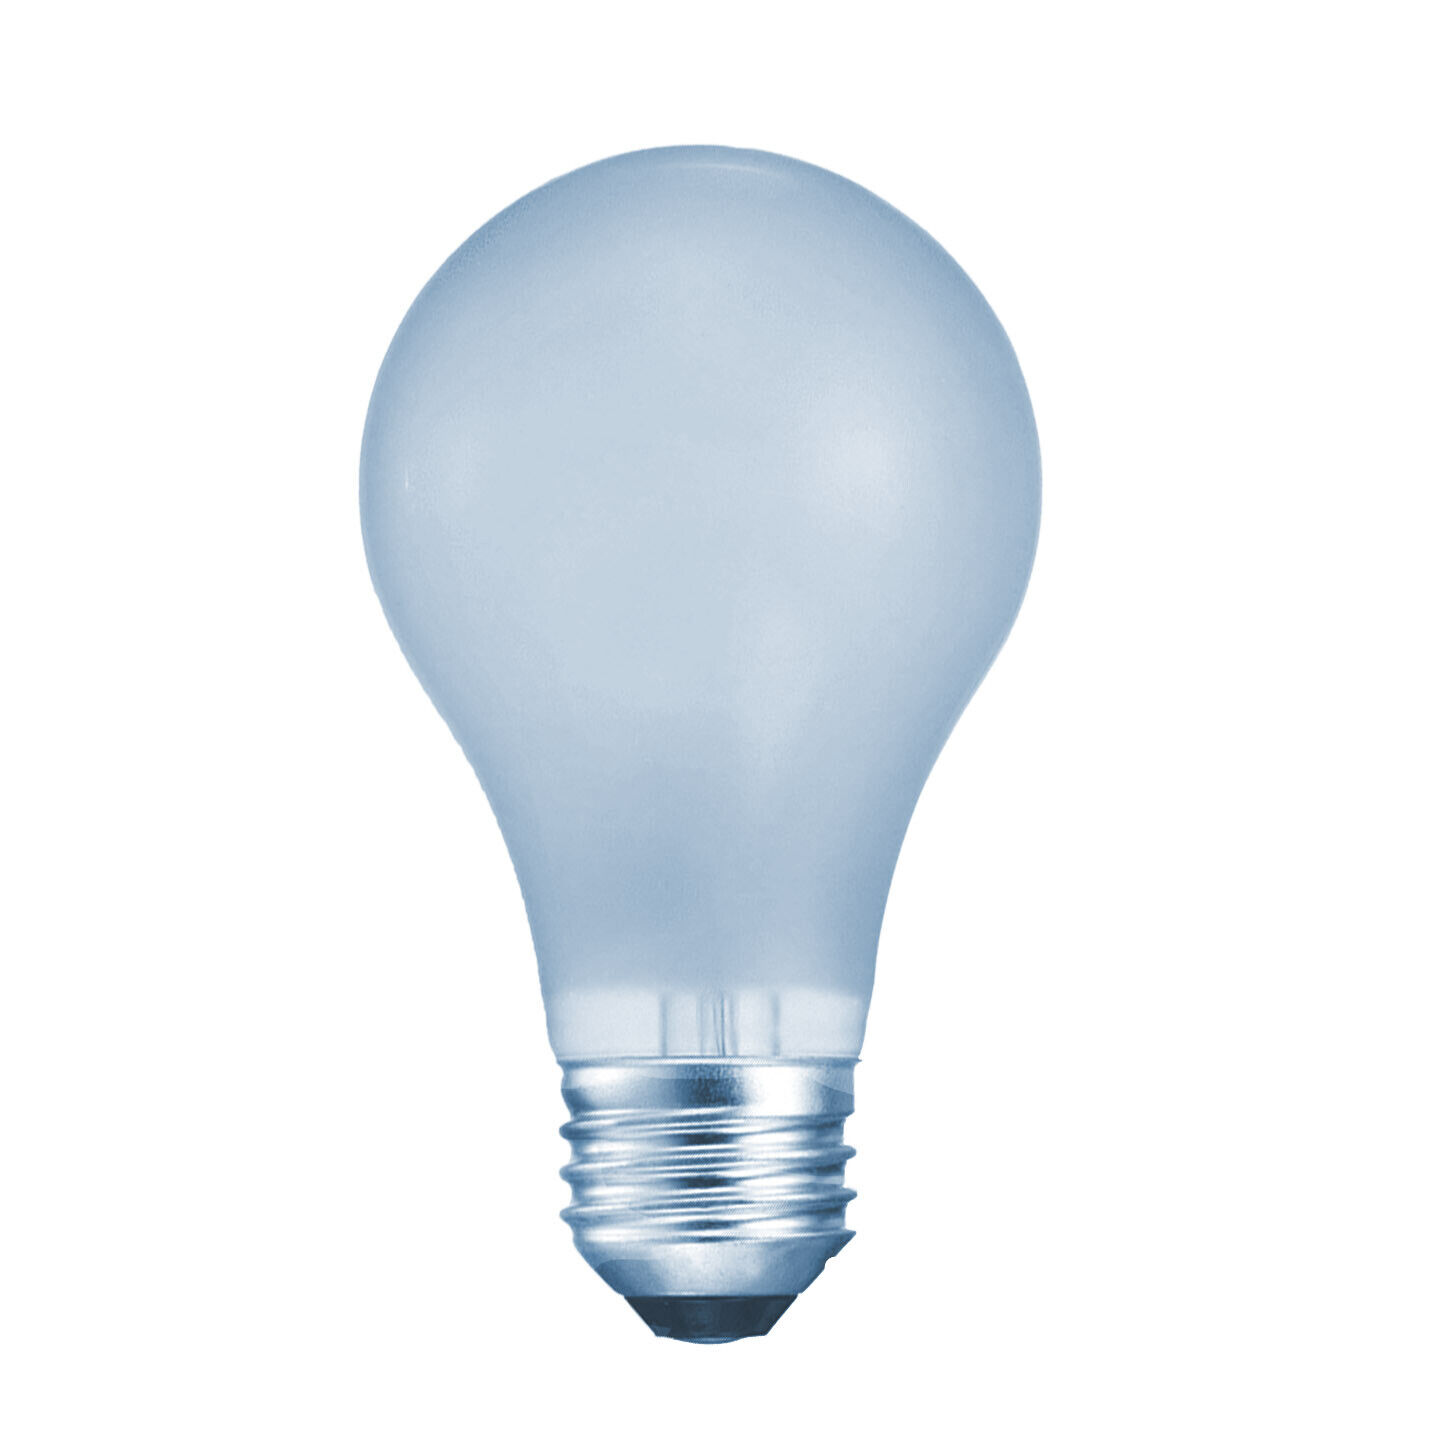 Phillips Agro-Lite 103163 A19 60-Watt Medium Base Incandescent Plant Light